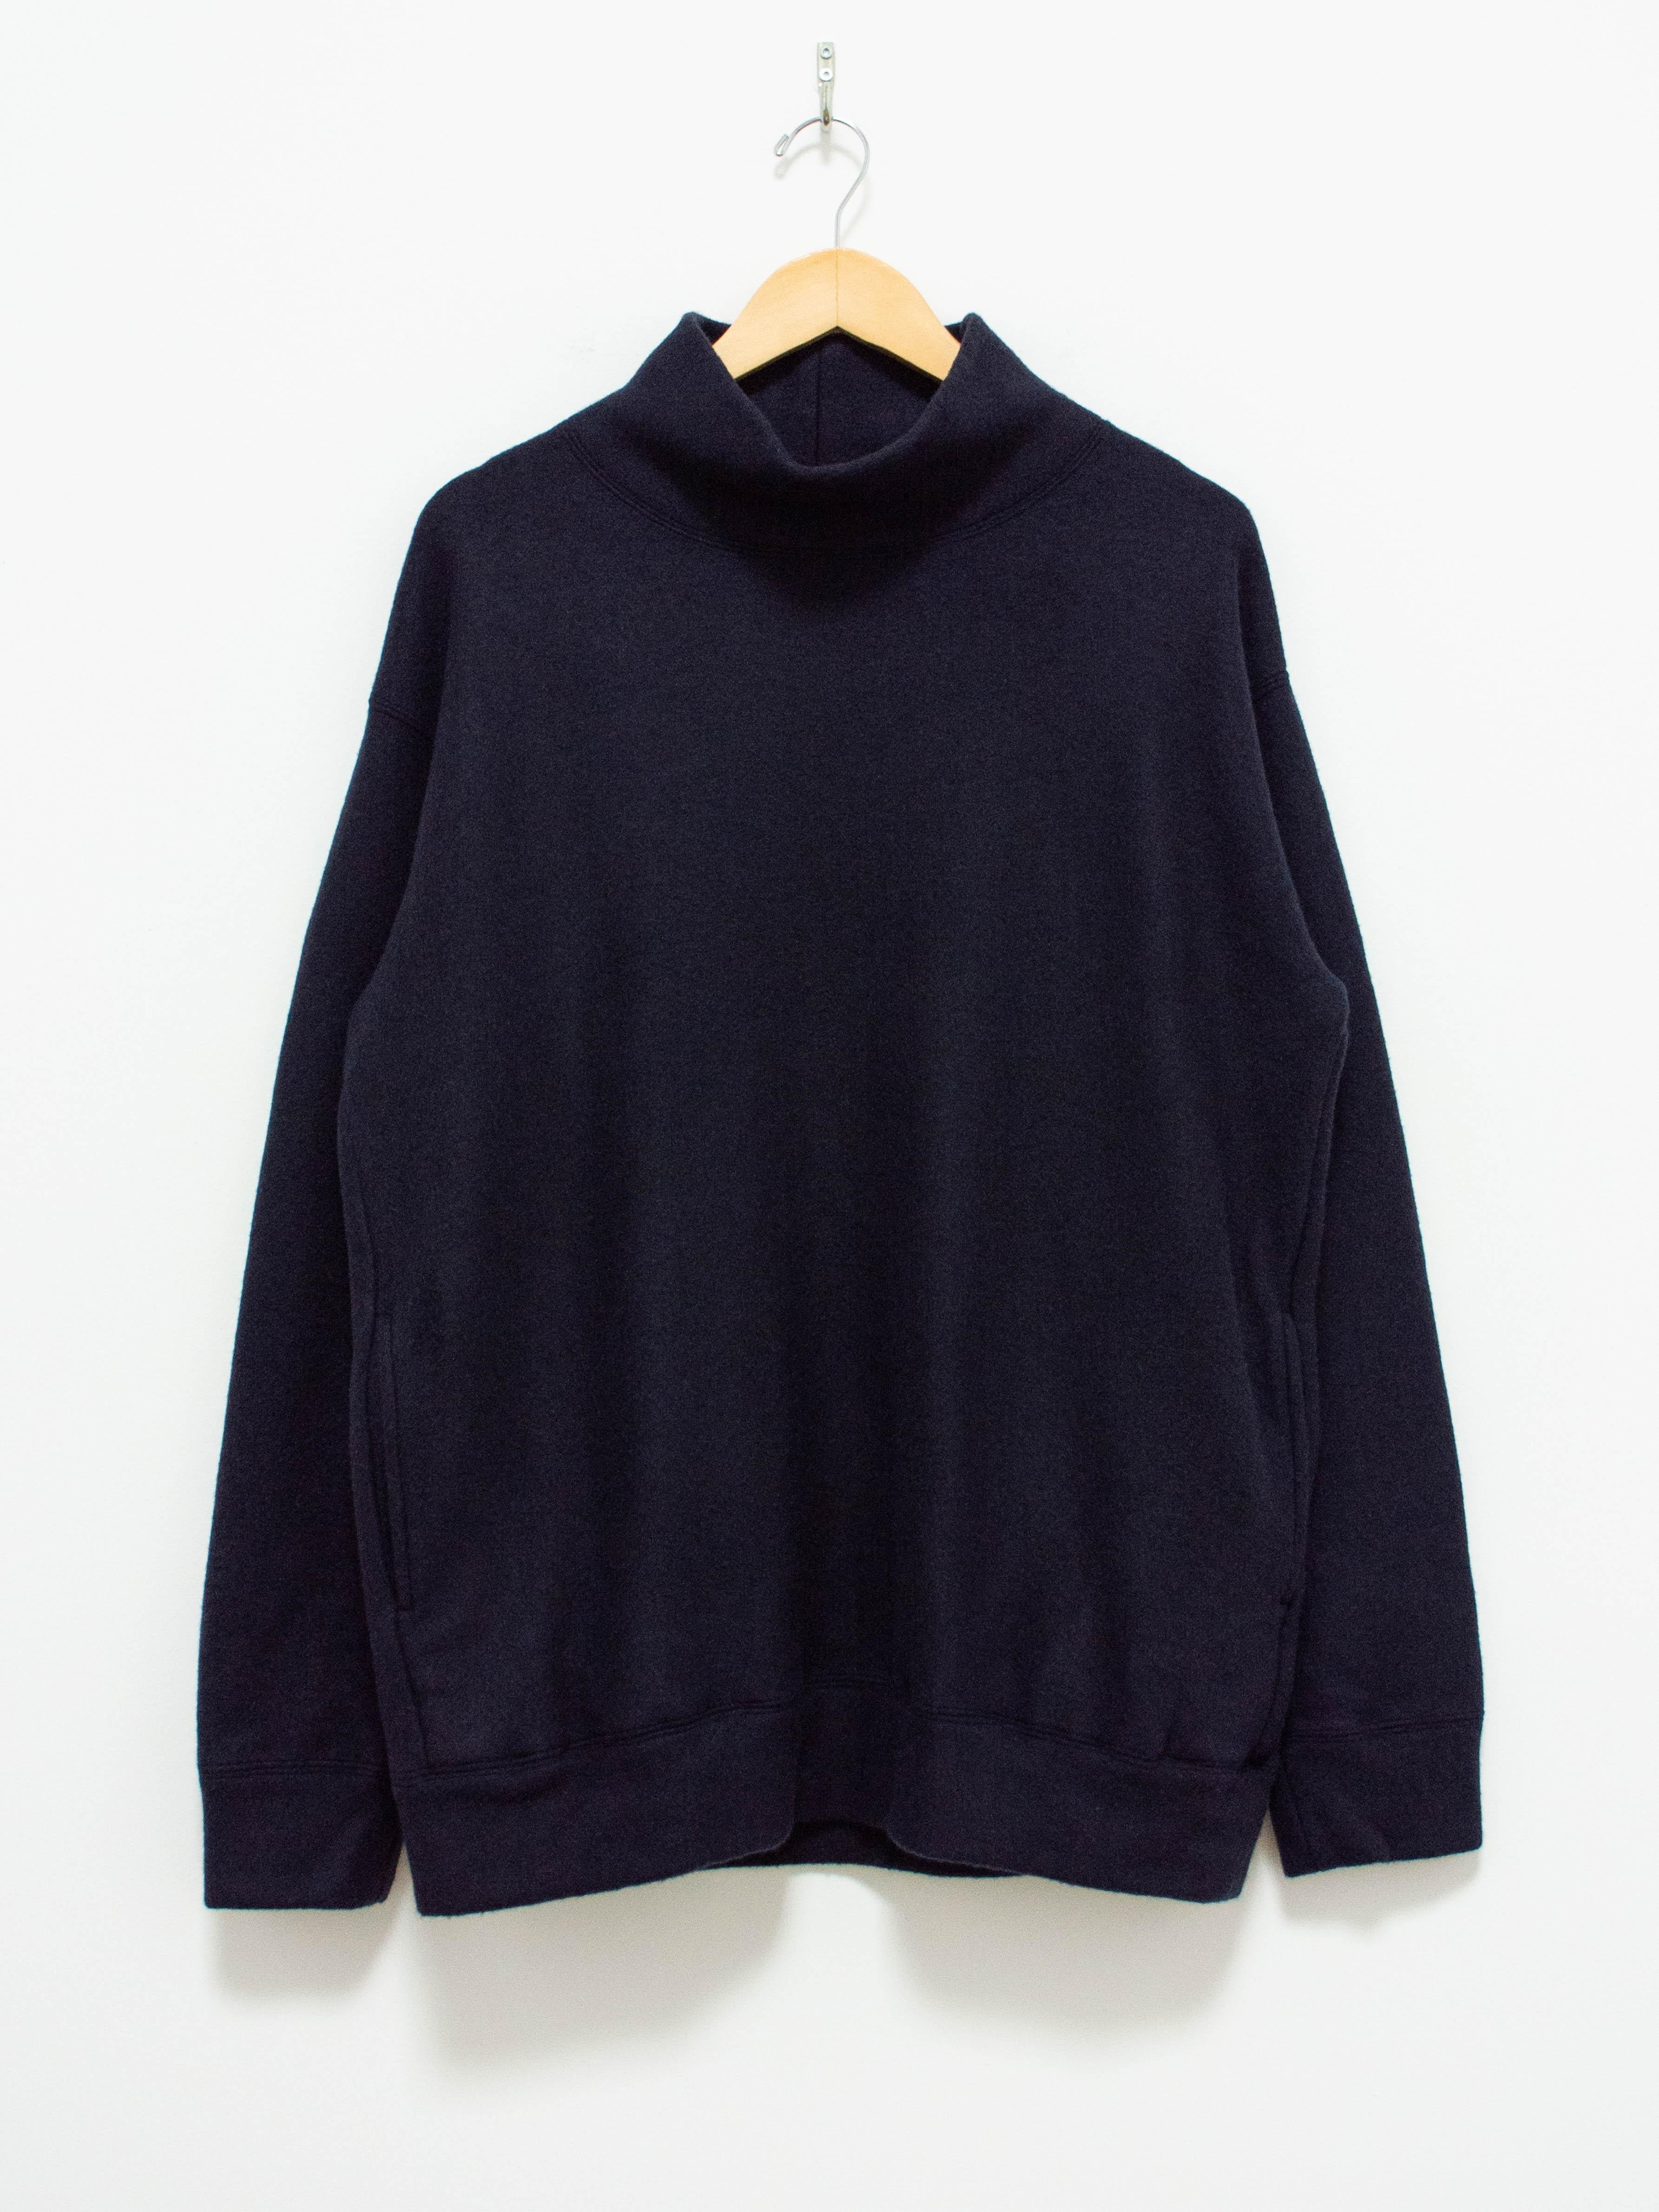 Namu Shop - ts(s) Brushed Wool Jersey High Neck Sweatshirt - Navy